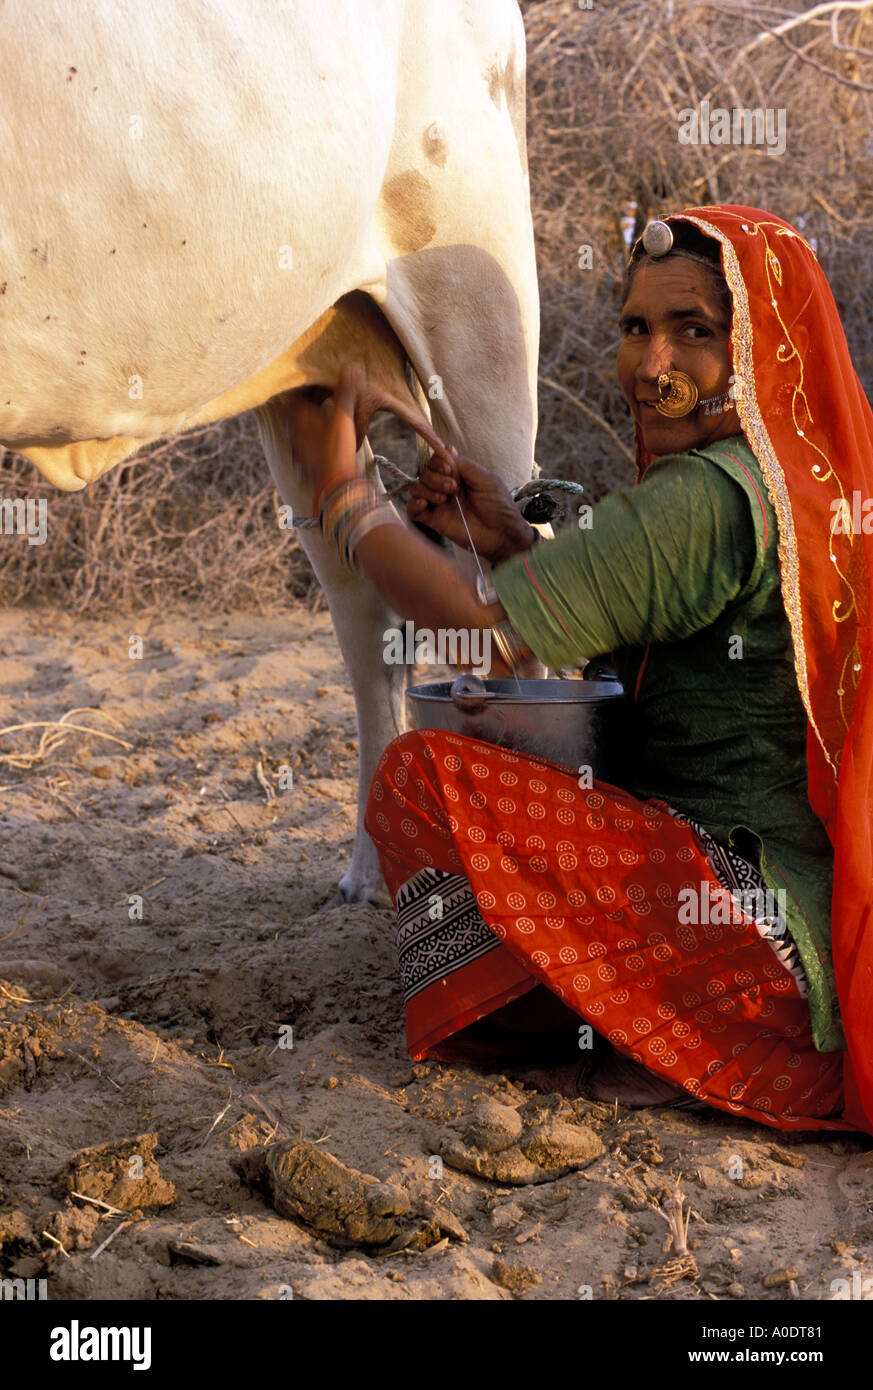 Le mode de vie des tribus indigènes indigènes Bishnoi ou le désert du Rajasthan en Inde Banque D'Images